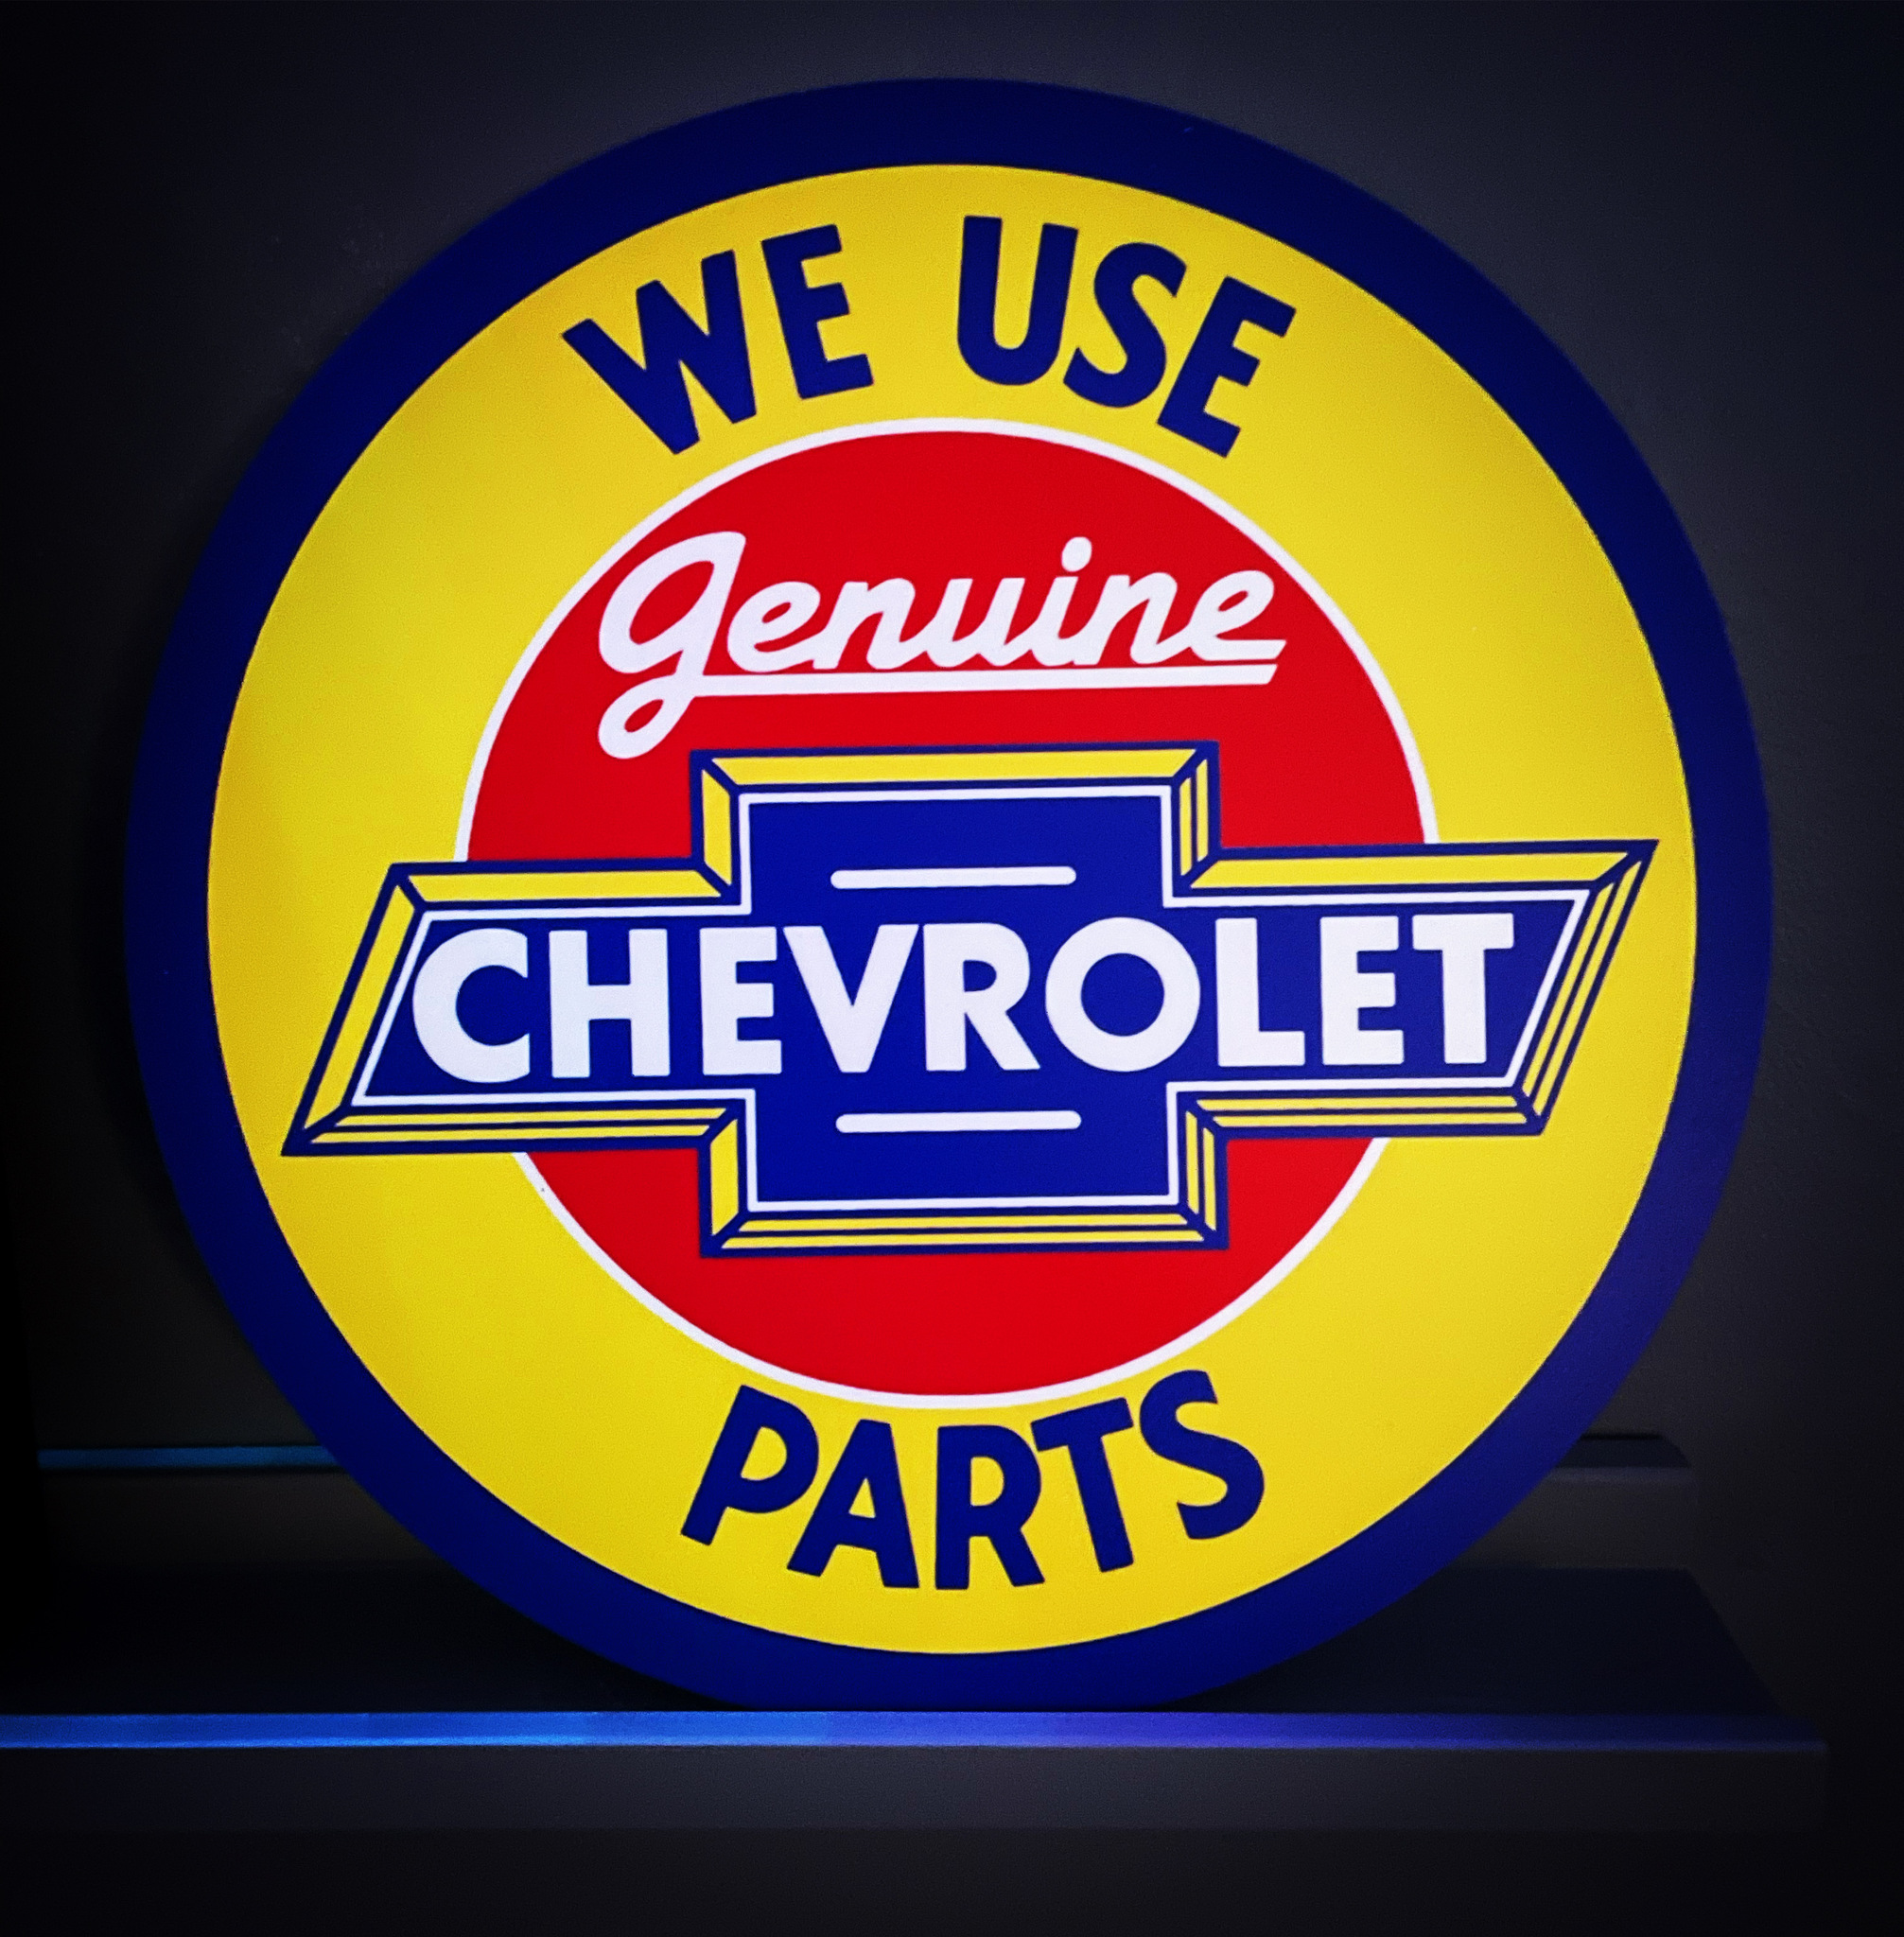 Chevrolet Genuine Parts Skylt